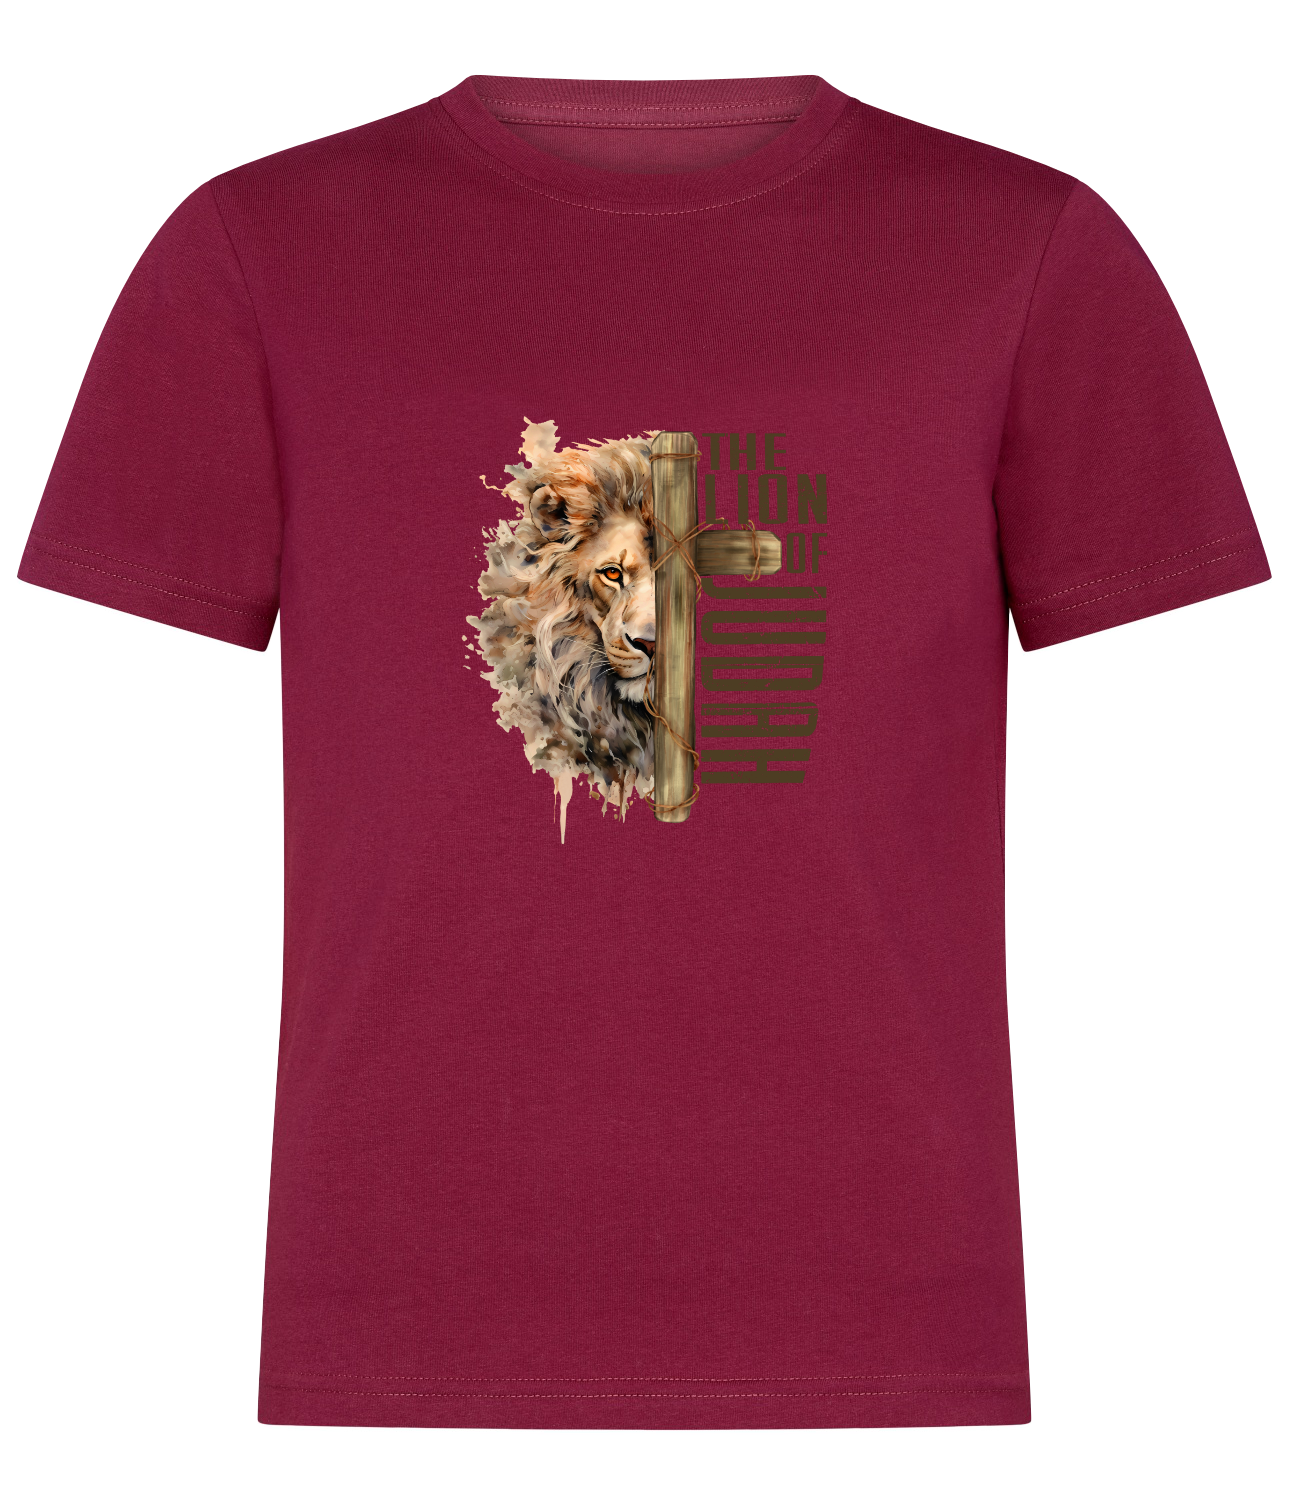 KIDS pREHmium Shirt - The Lion of Judah